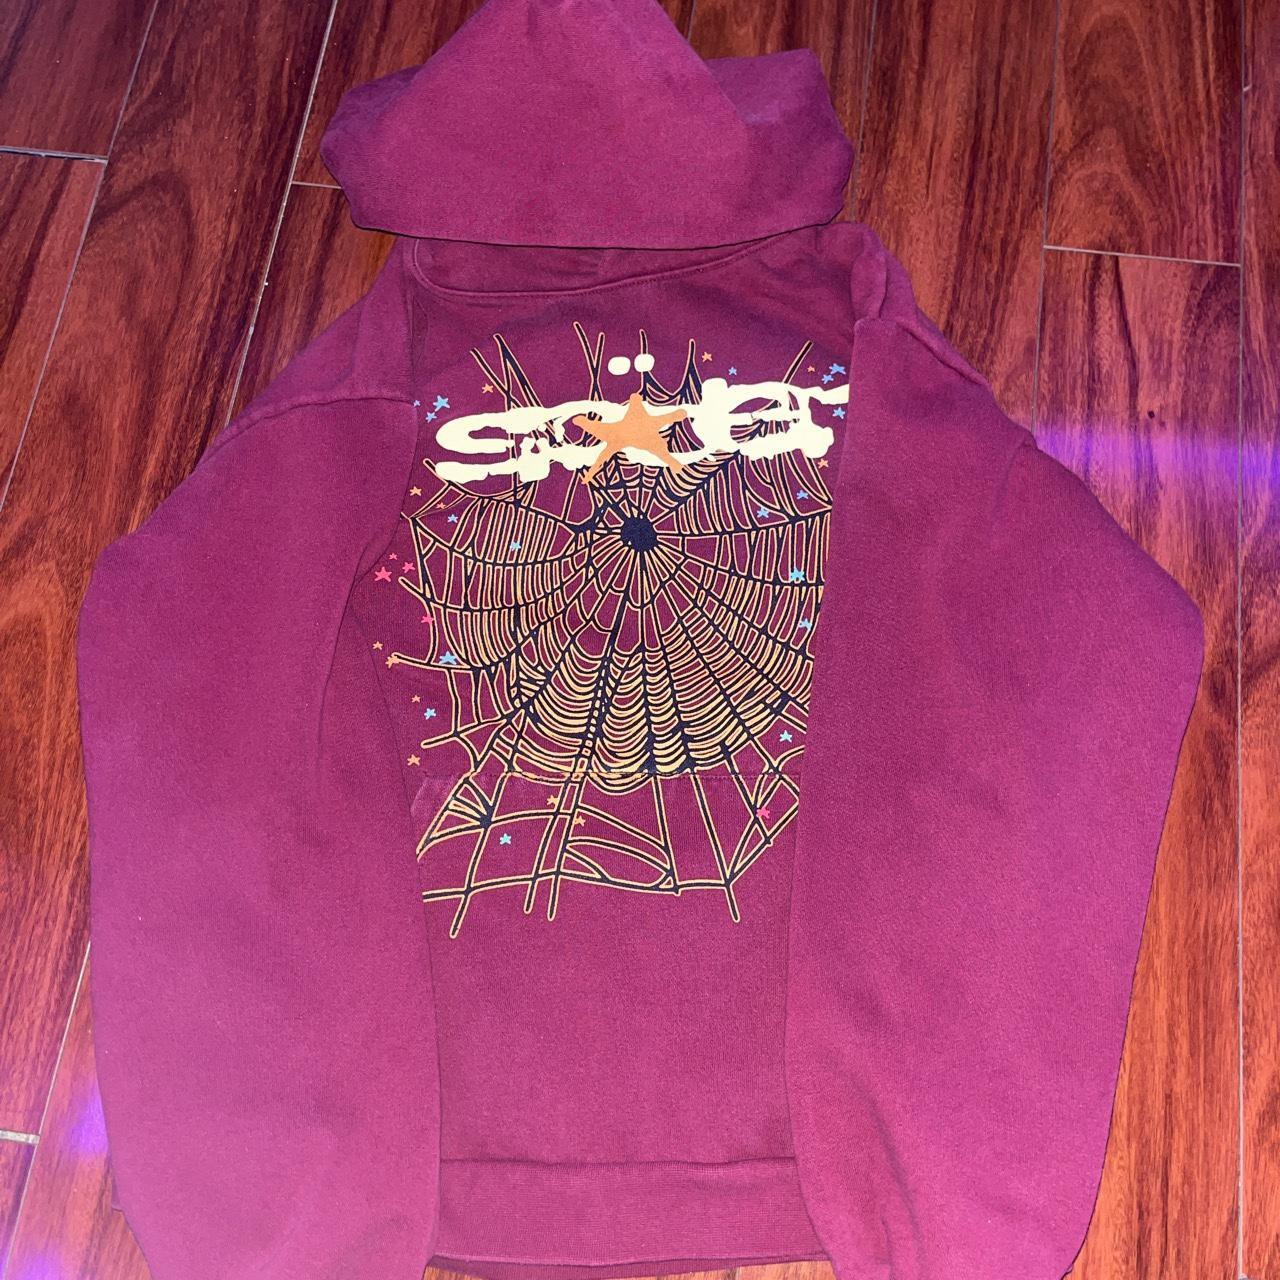 maroon sp5der hoodie in excellent condition, tag... - Depop